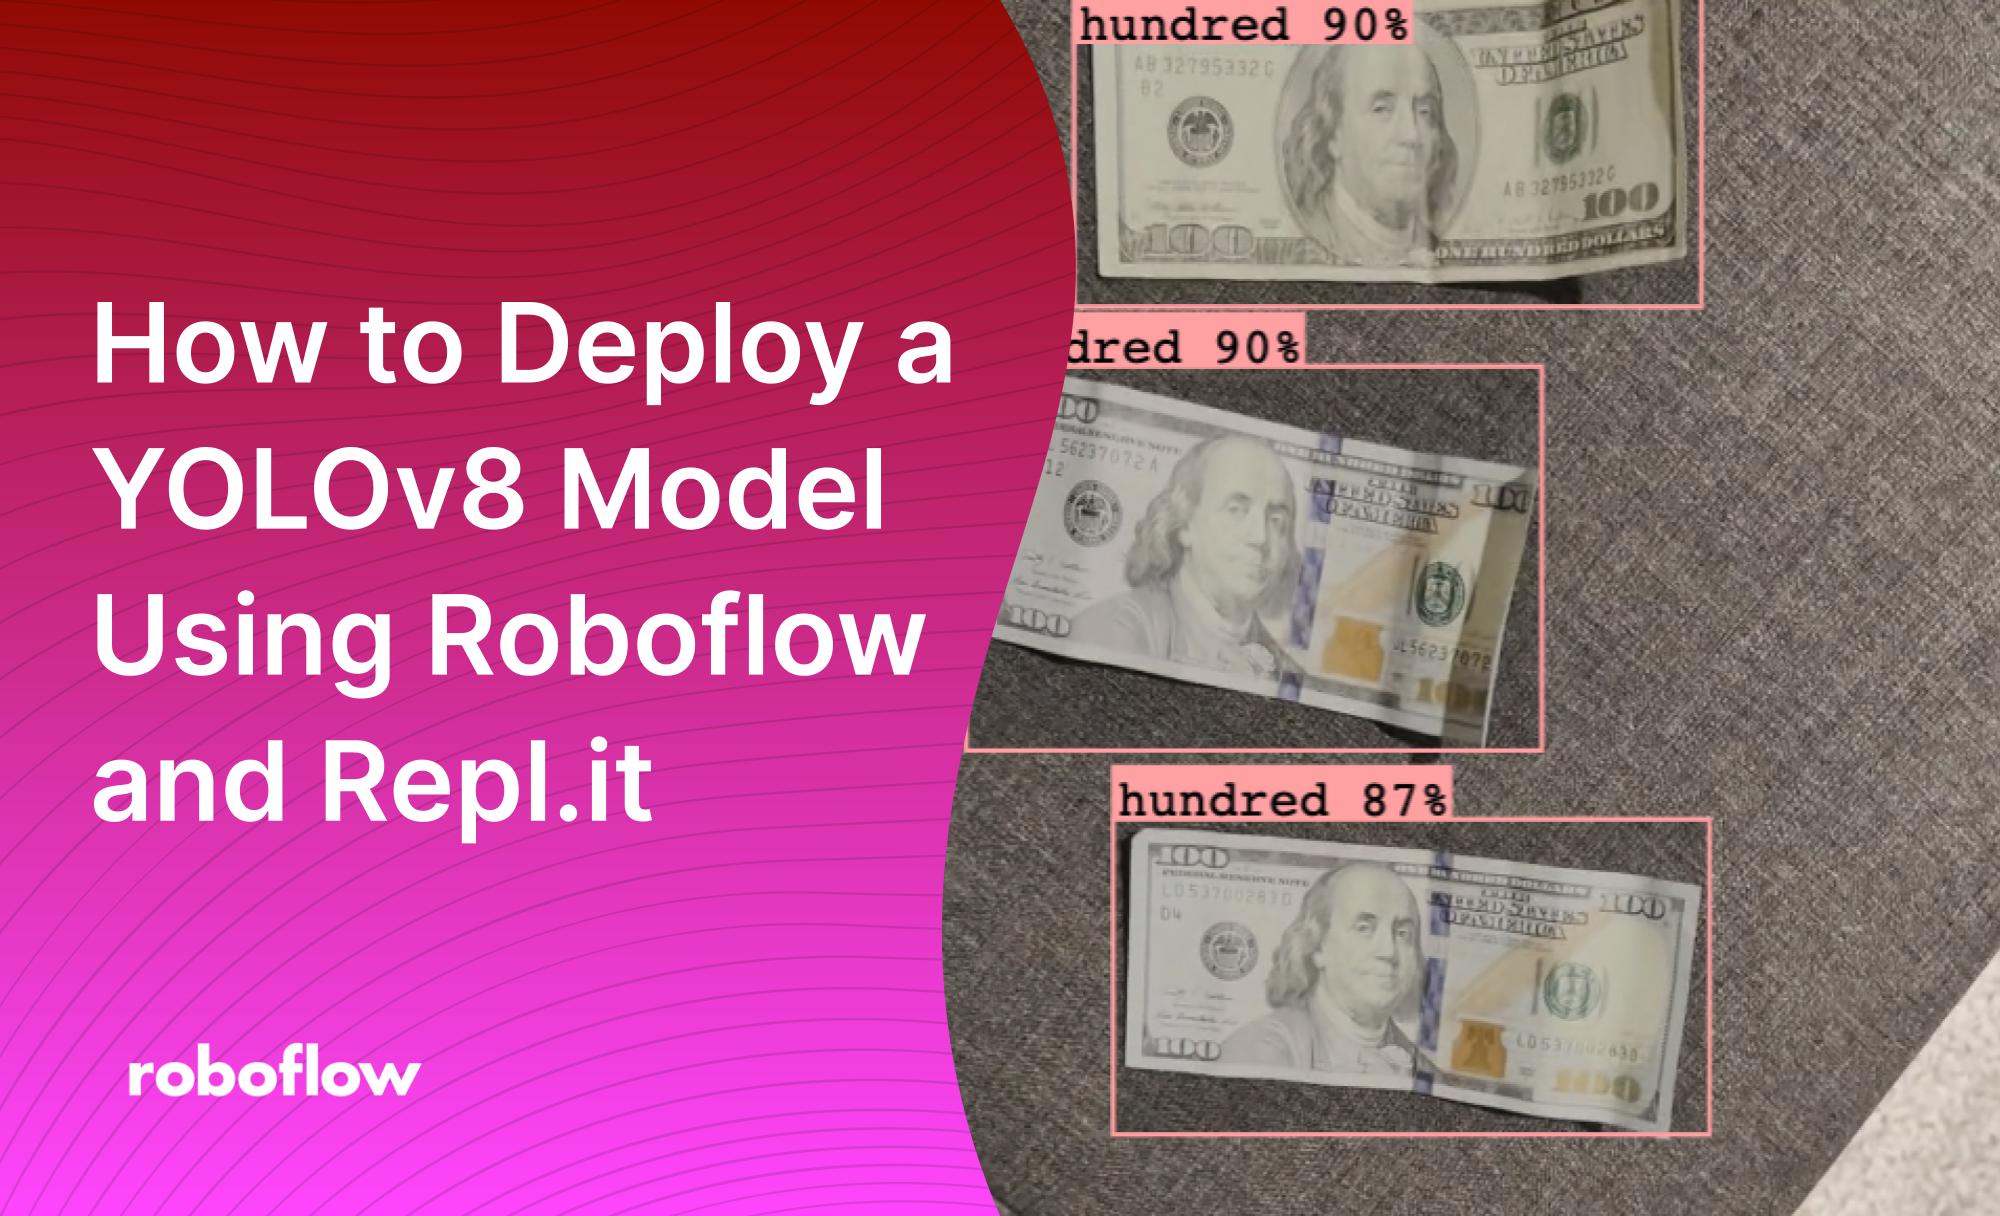 RoboflowとRepl.itを使用してYOLOv8モデルをデプロイする方法